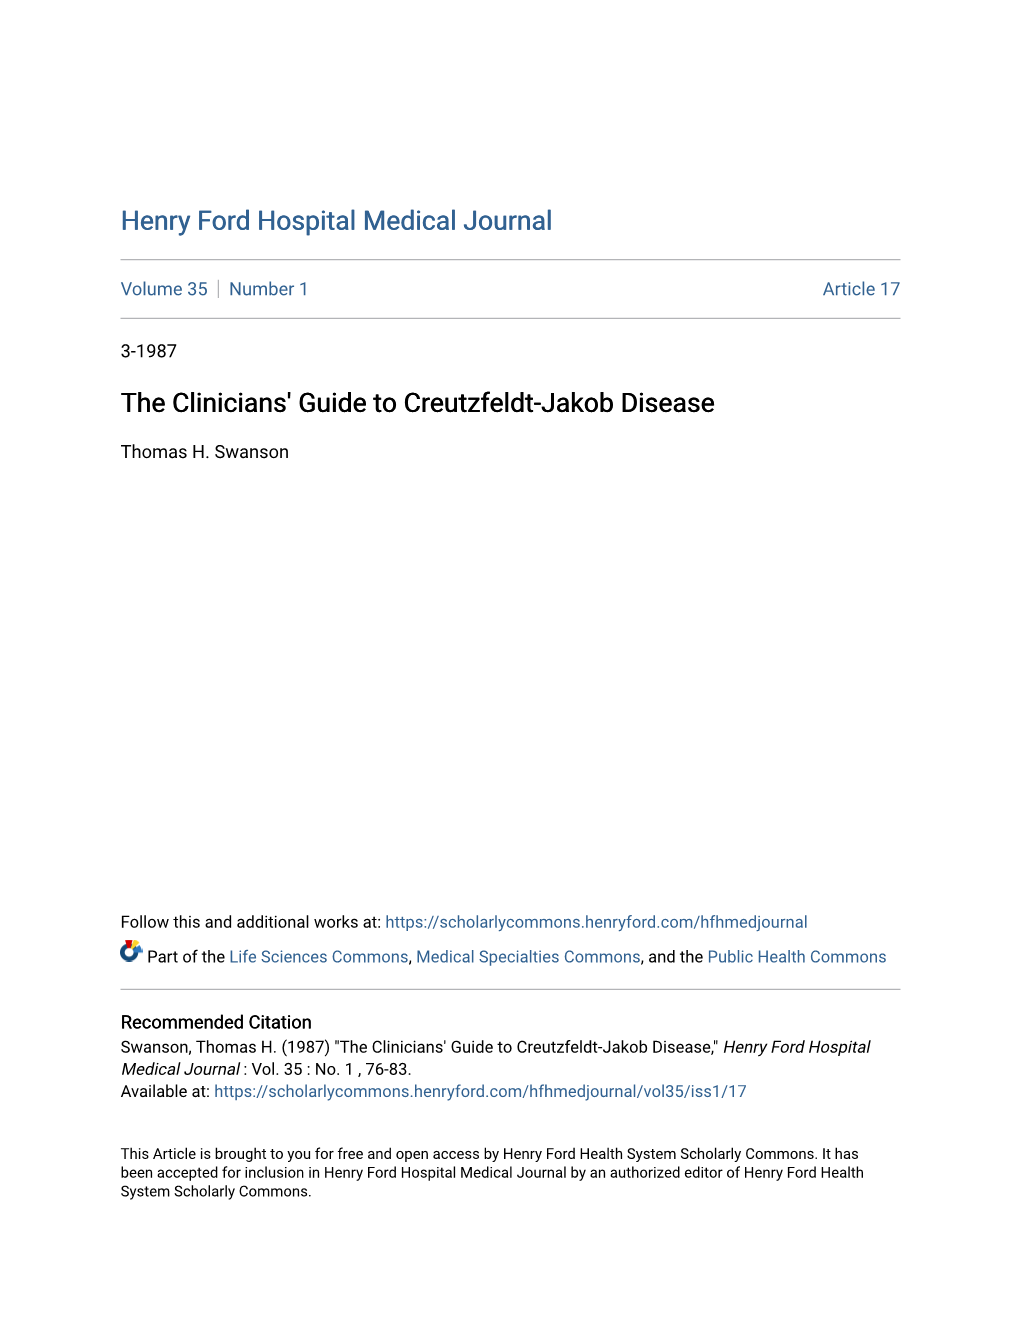 The Clinicians' Guide to Creutzfeldt-Jakob Disease